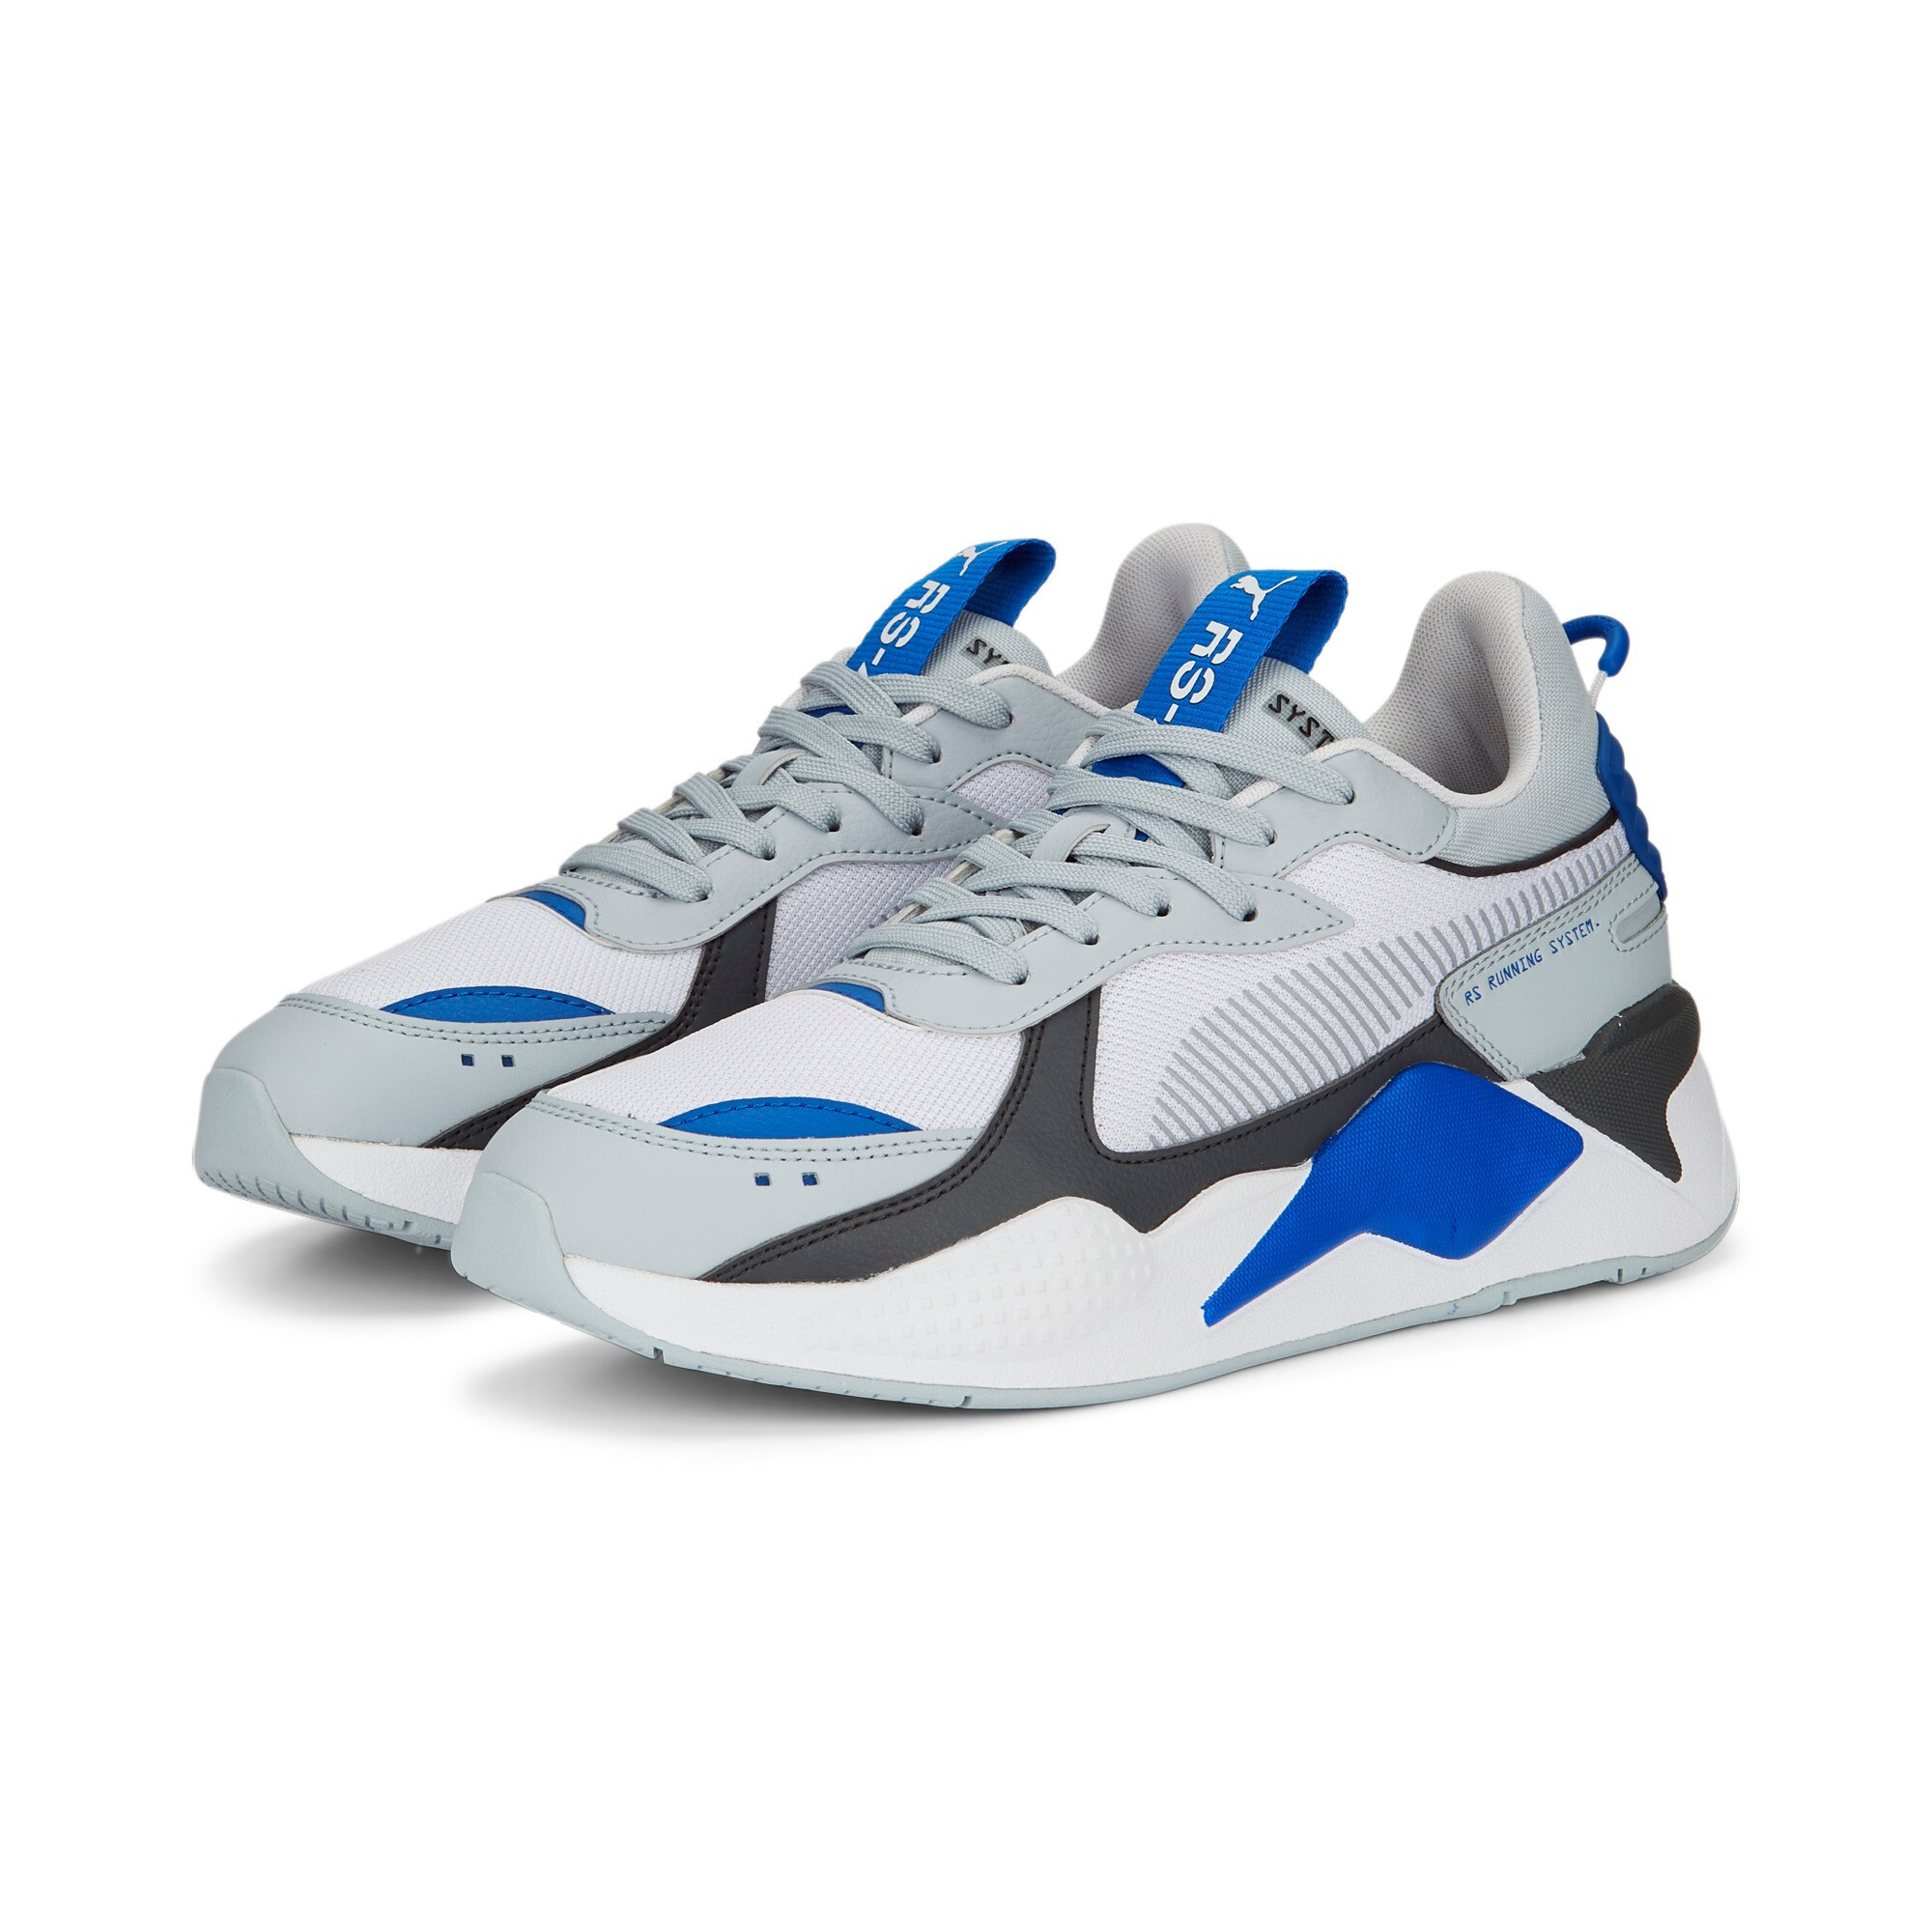 Puma RS-X Geek men's sneakers - White/Grey - 391174 01